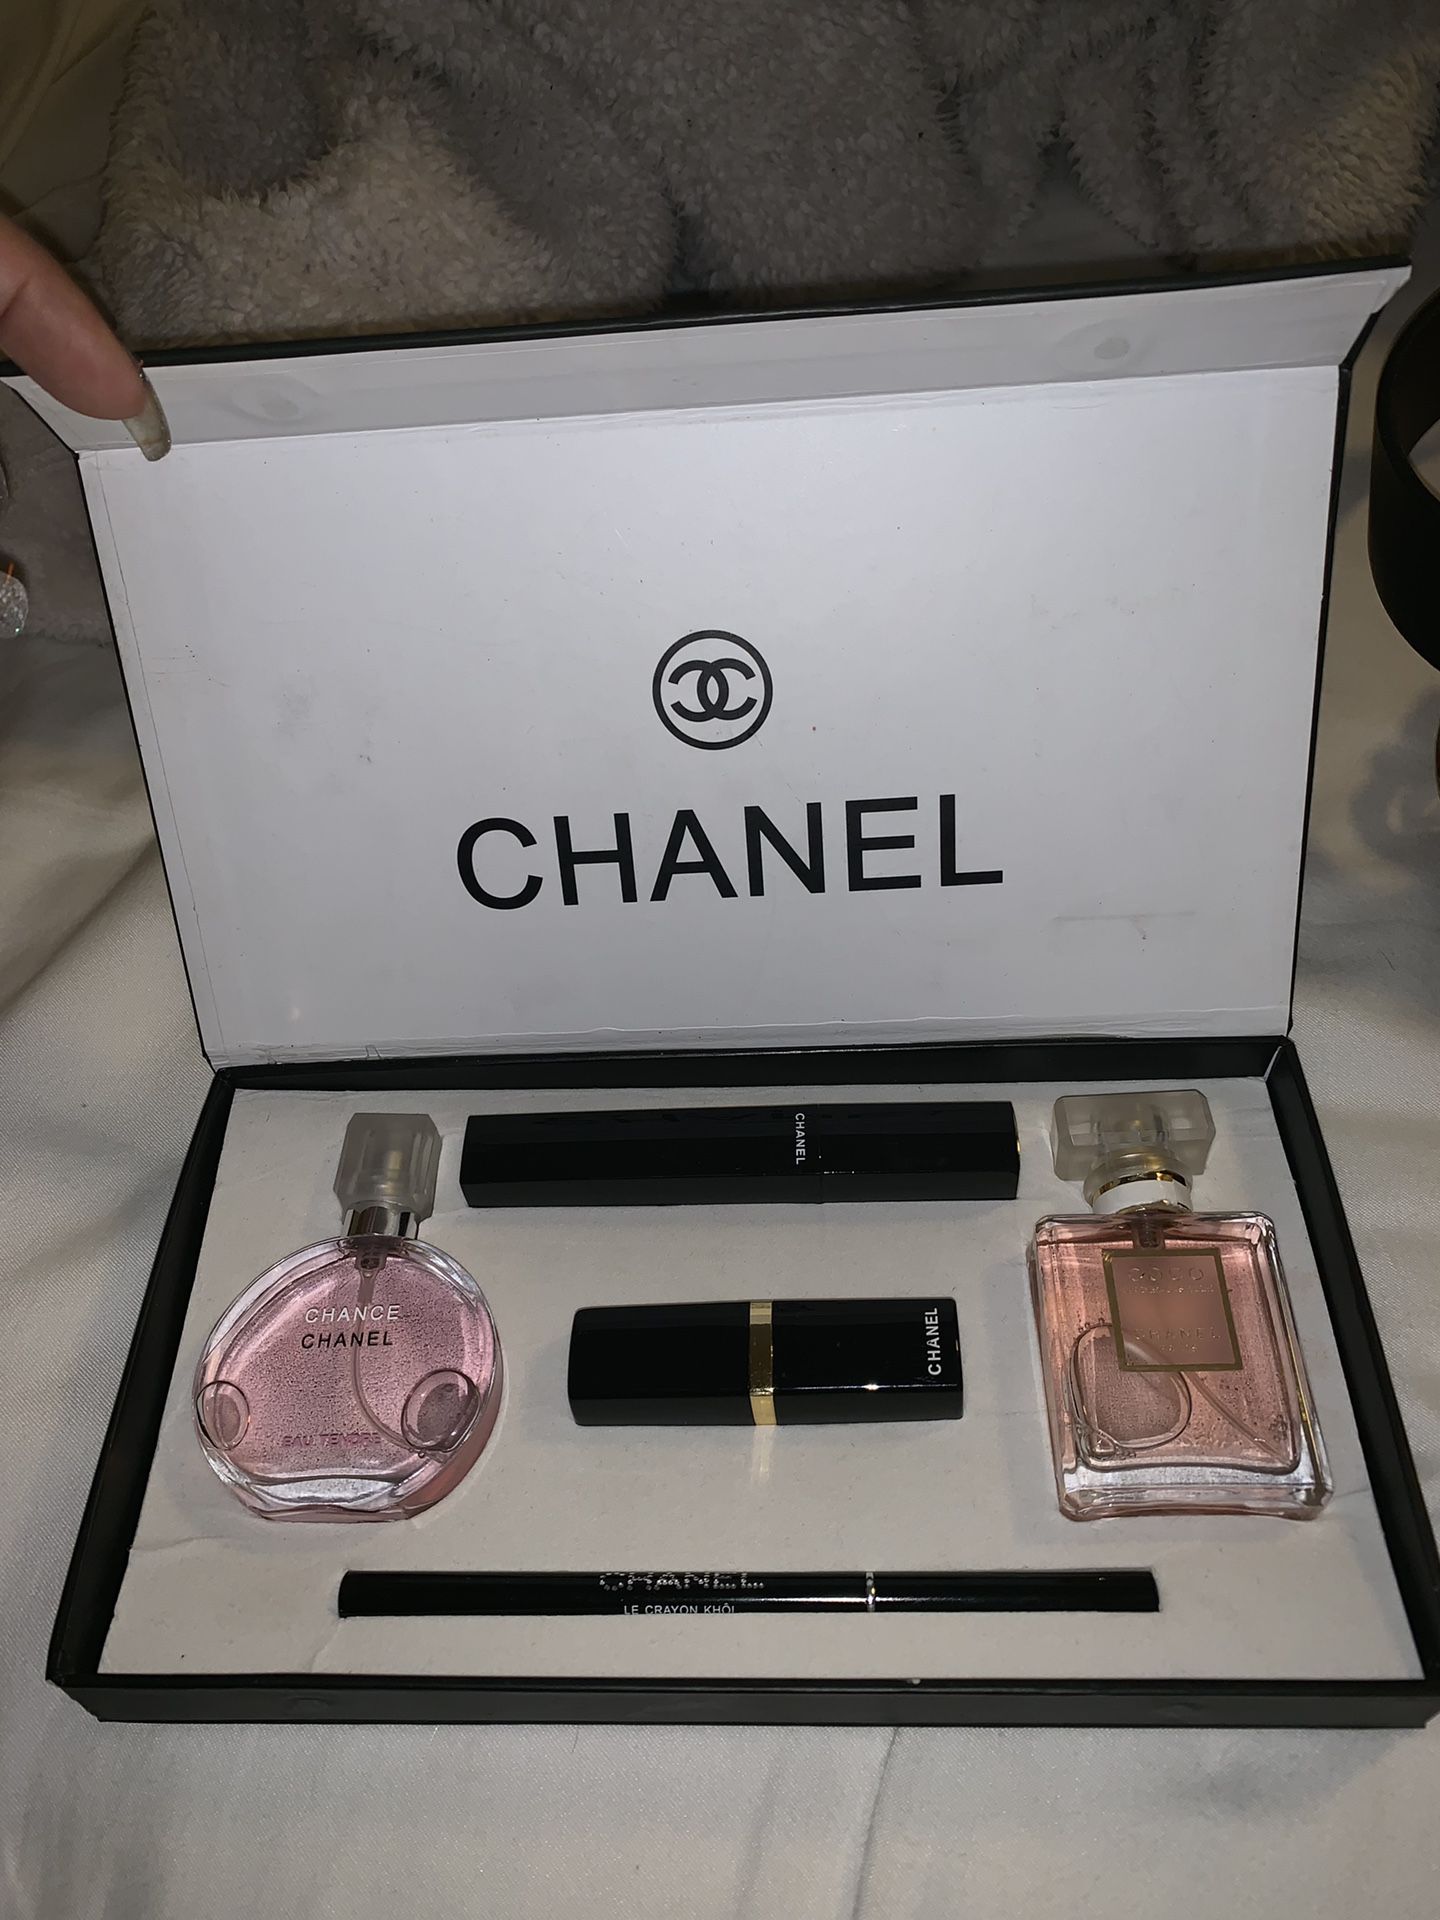 Chanel gift box 2 perfumes and makeup